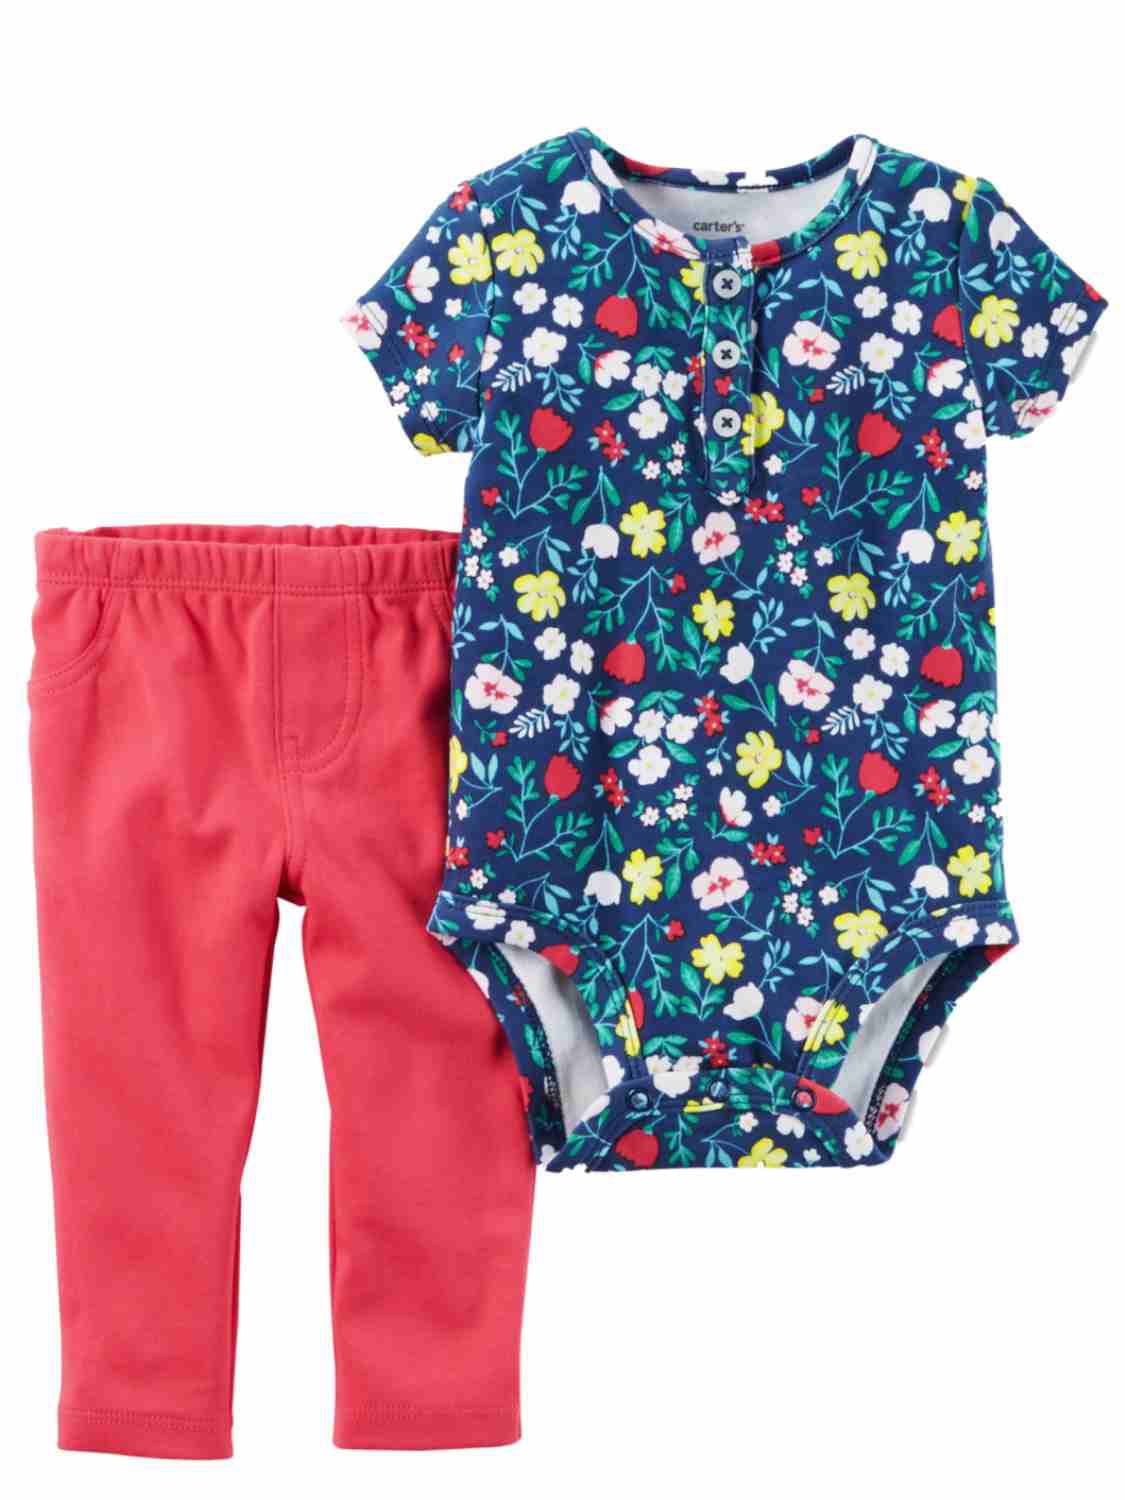 NEW $12 Carter's Infant Baby Girls Bodysuit NB 3 6 9 12 18 24 Months 